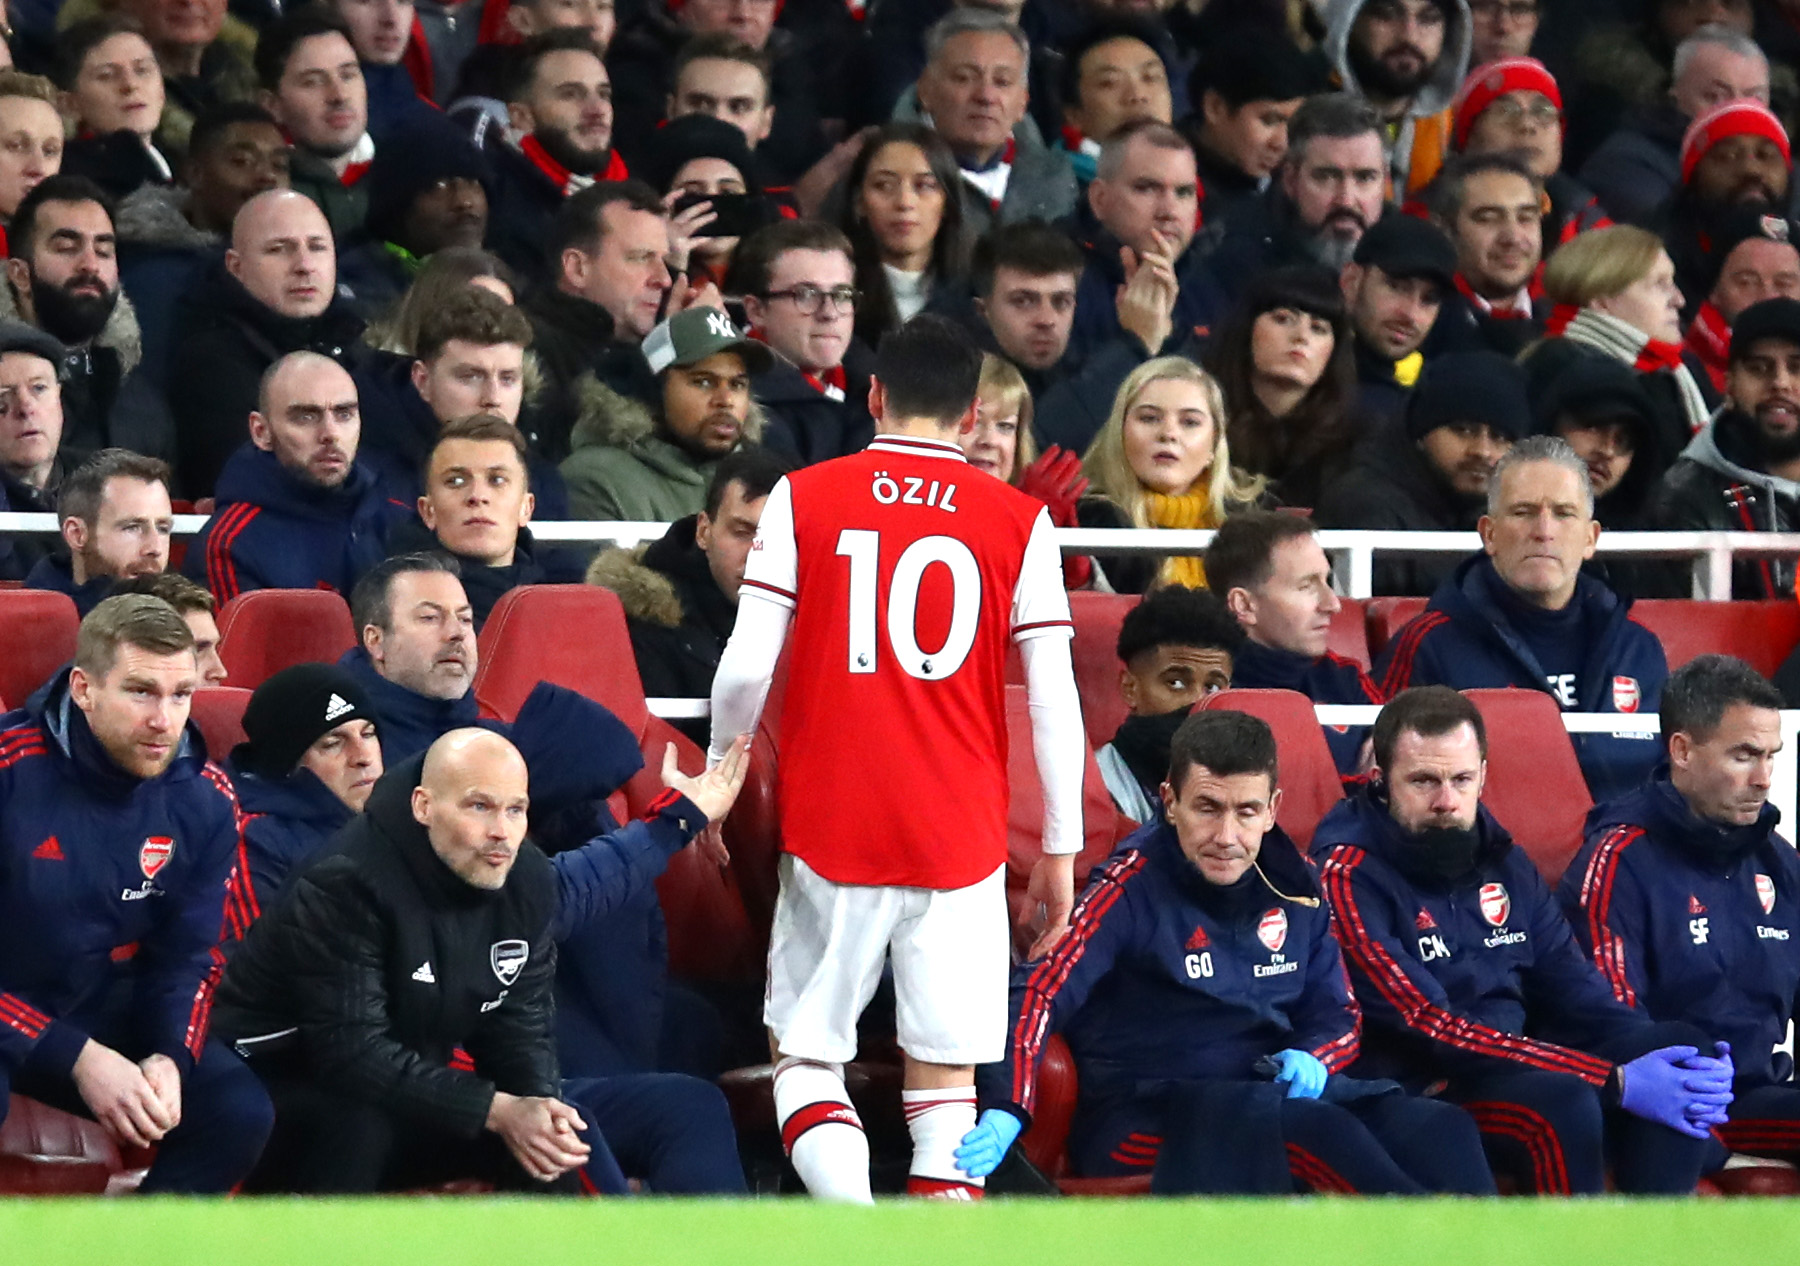 Ruptura Arsenal - Ozil provoacă reacții dure în fotbalul englez. Owen Hargreaves s-a dezlănțuit